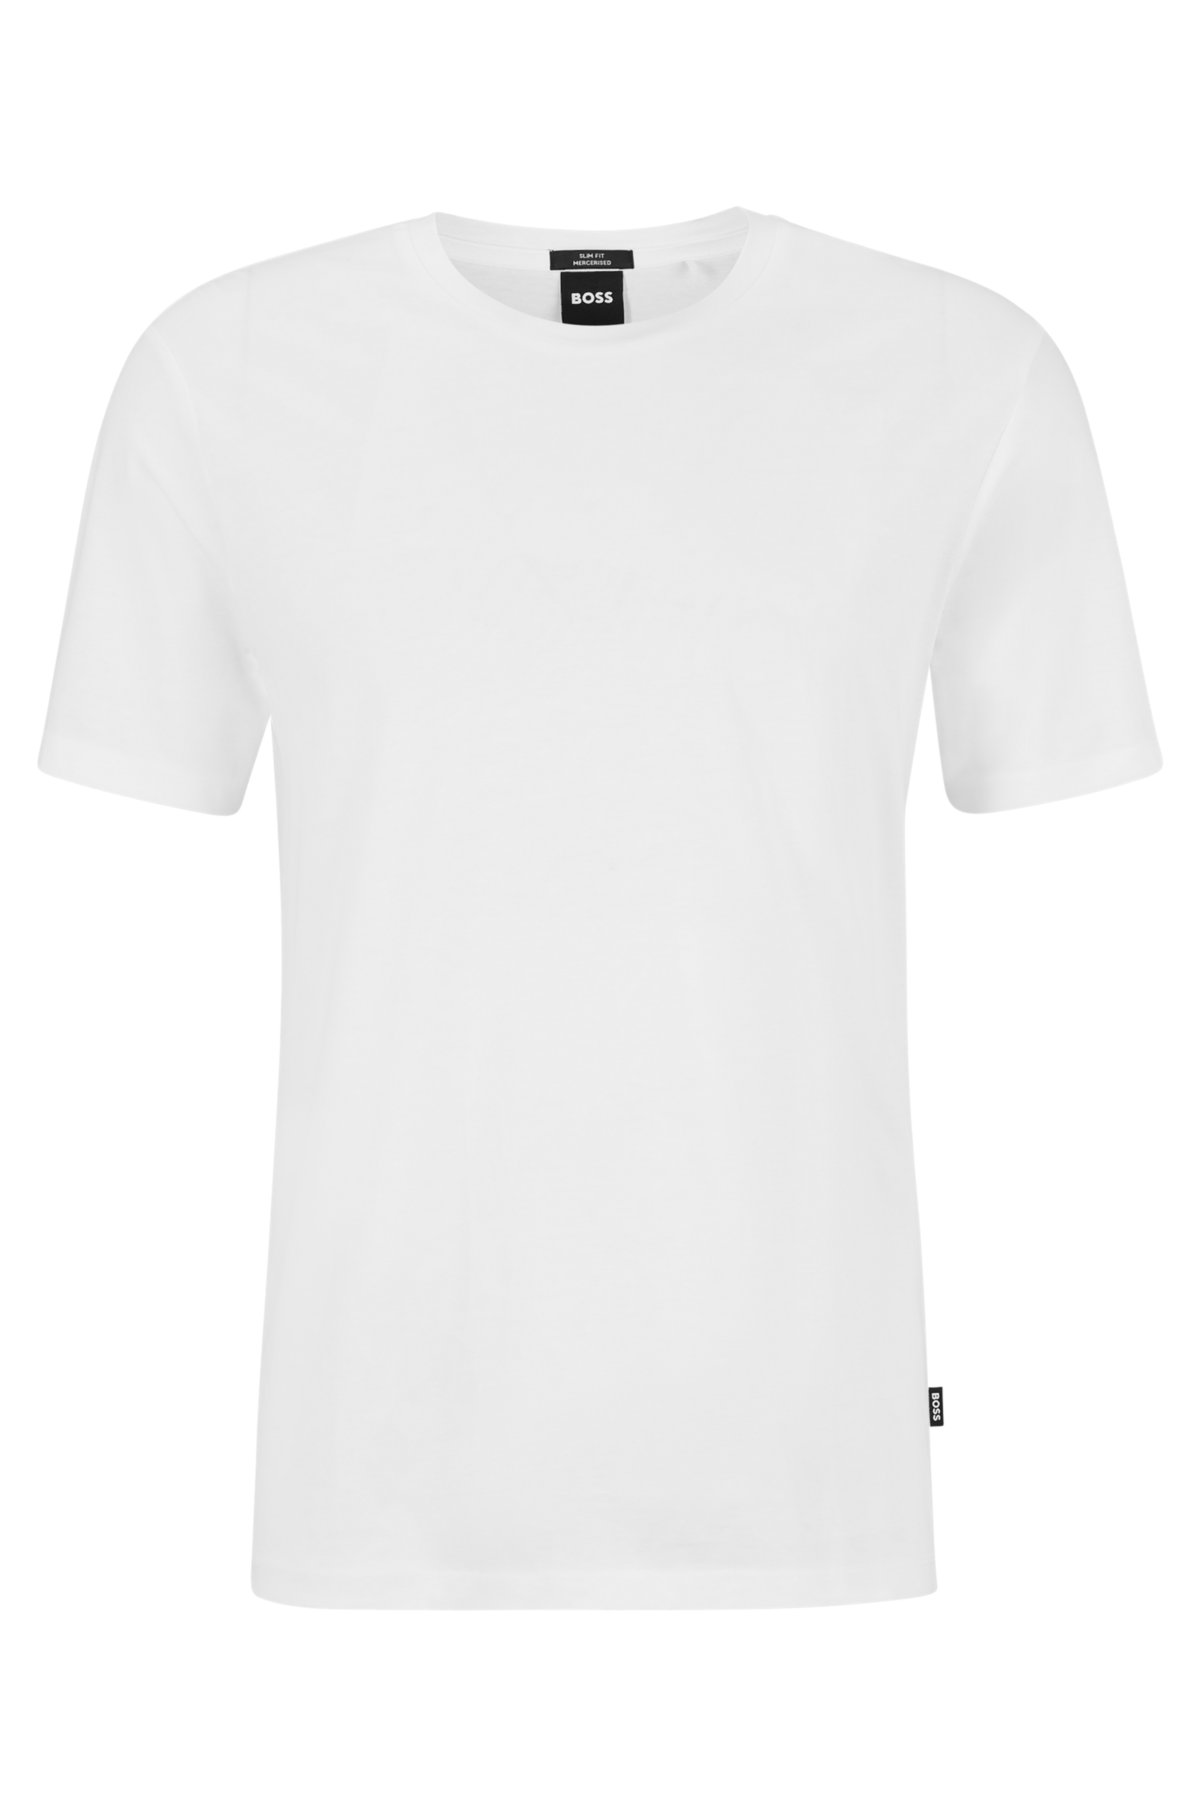 - Slim-fit short-sleeved T-shirt in mercerised cotton